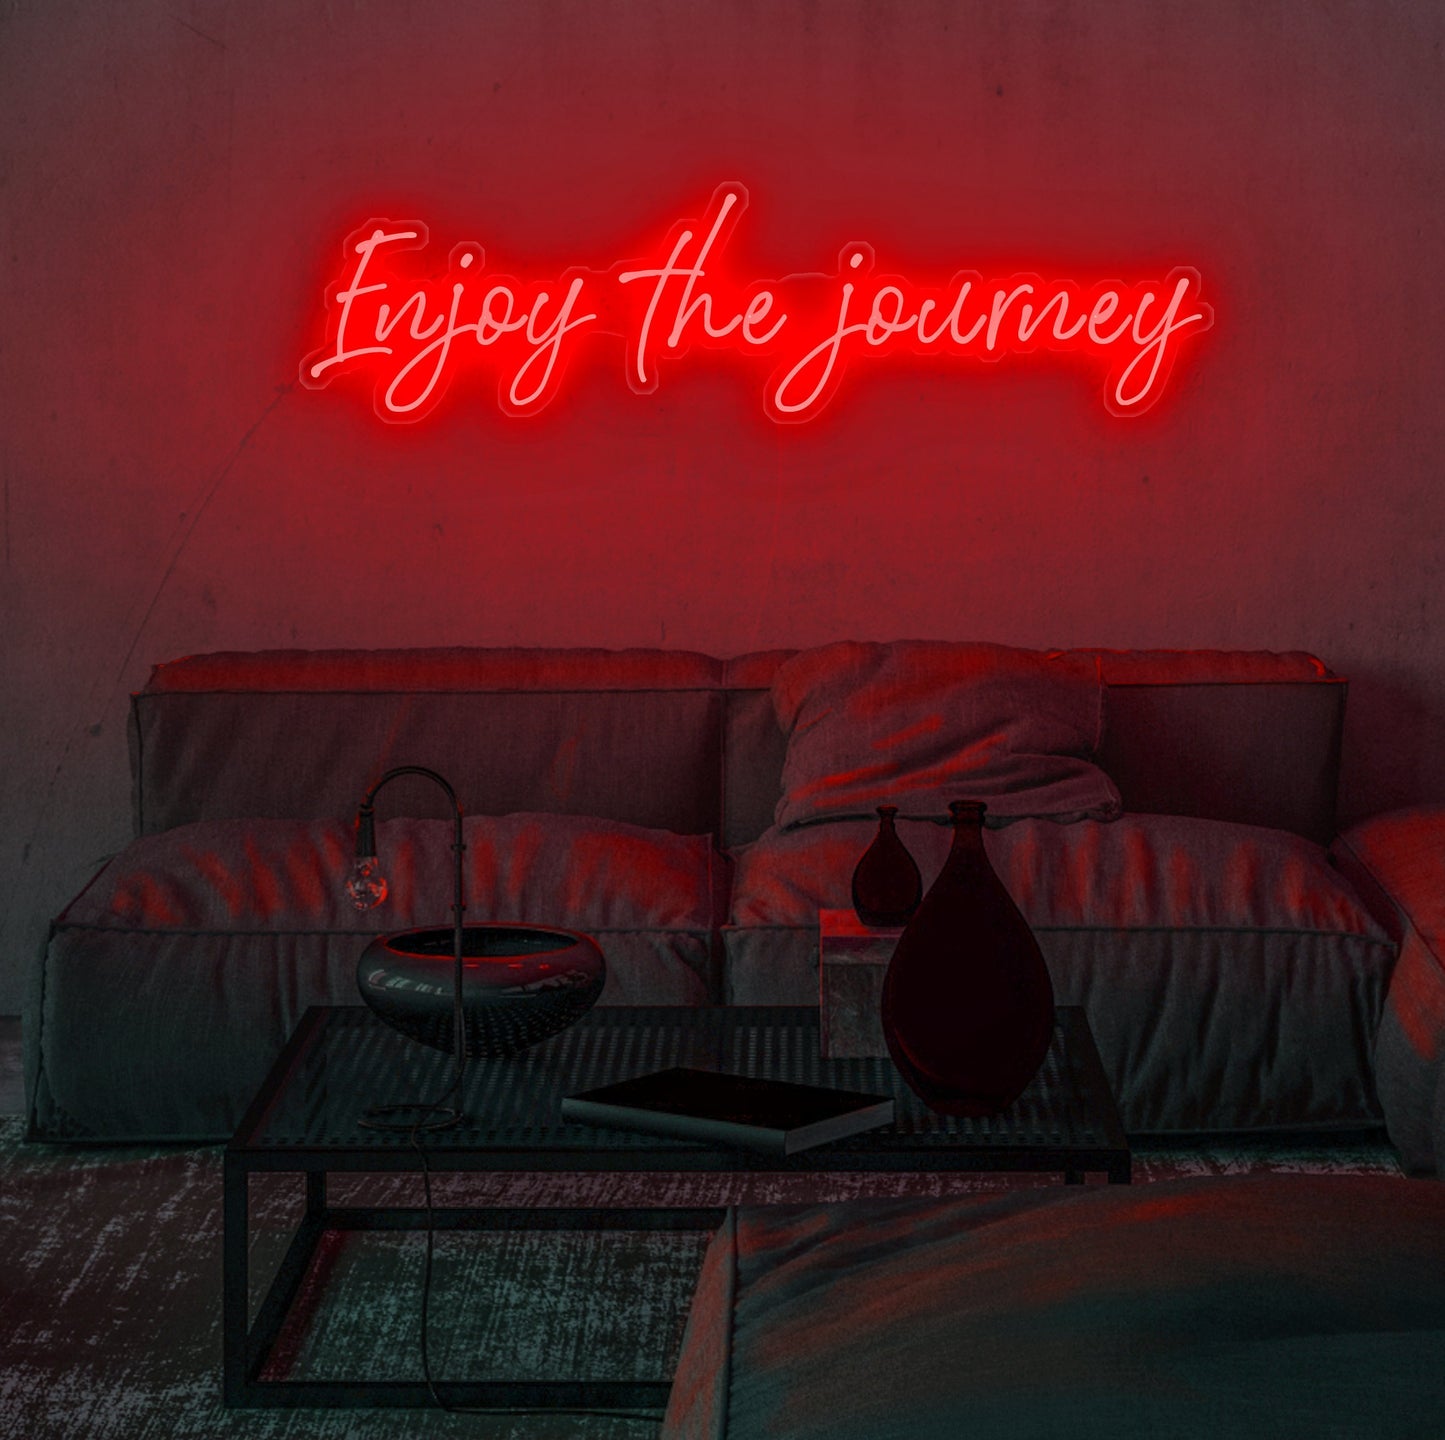 Enjoy The Journey Neon Sign